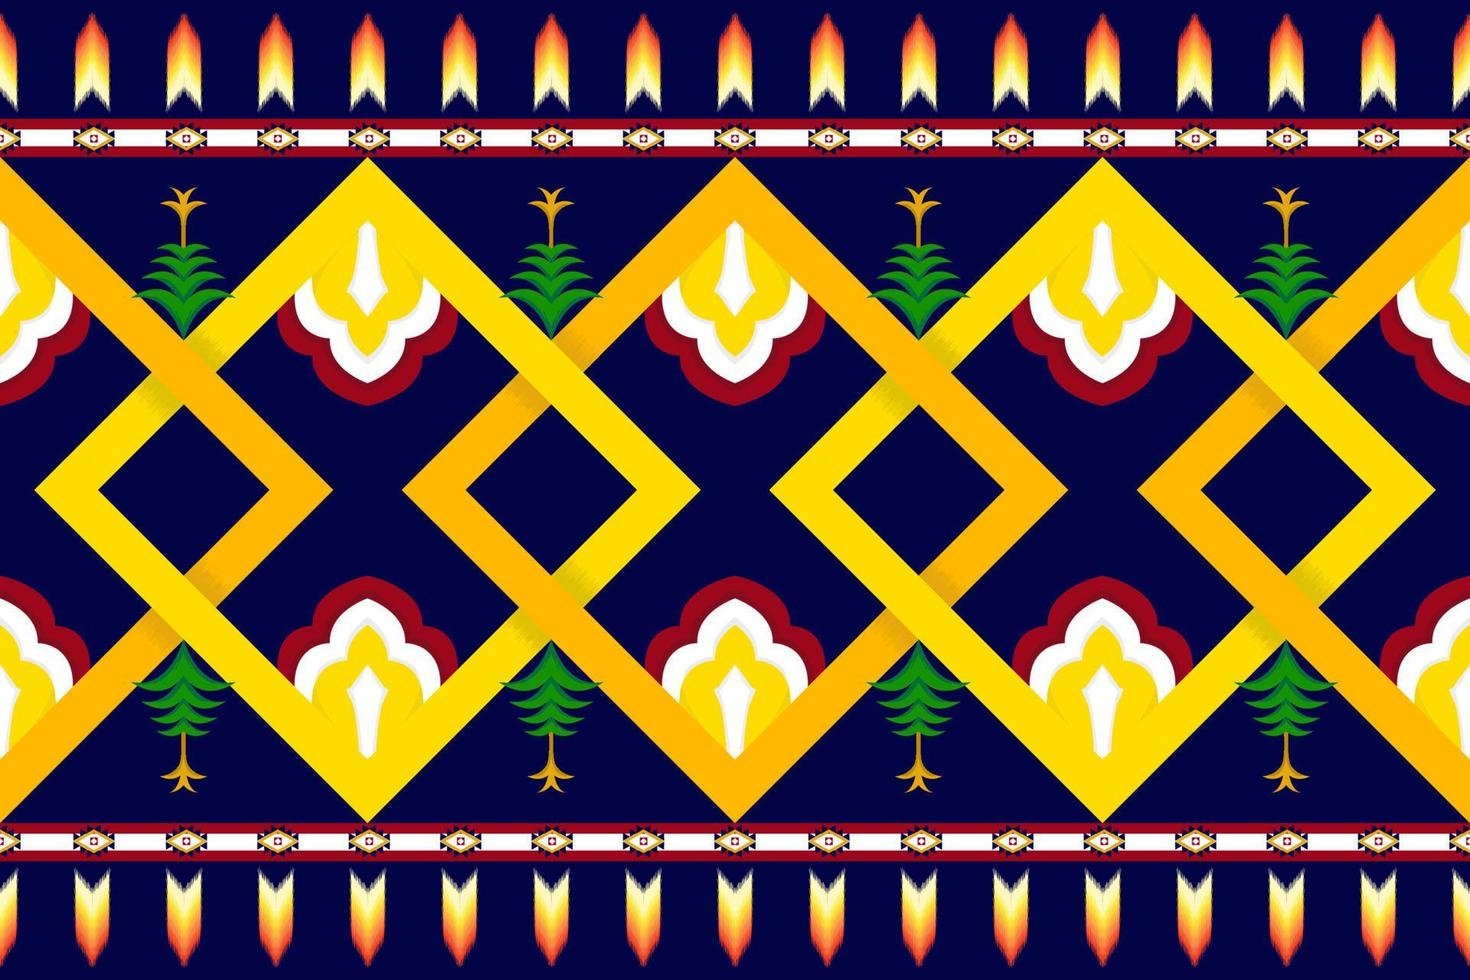 diseño de patrones étnicos geométricos abstractos. tela azteca alfombra mandala ornamento boho nativo chevron textil decoración papel tapiz. Fondo de vector de bordado tradicional étnico tribal